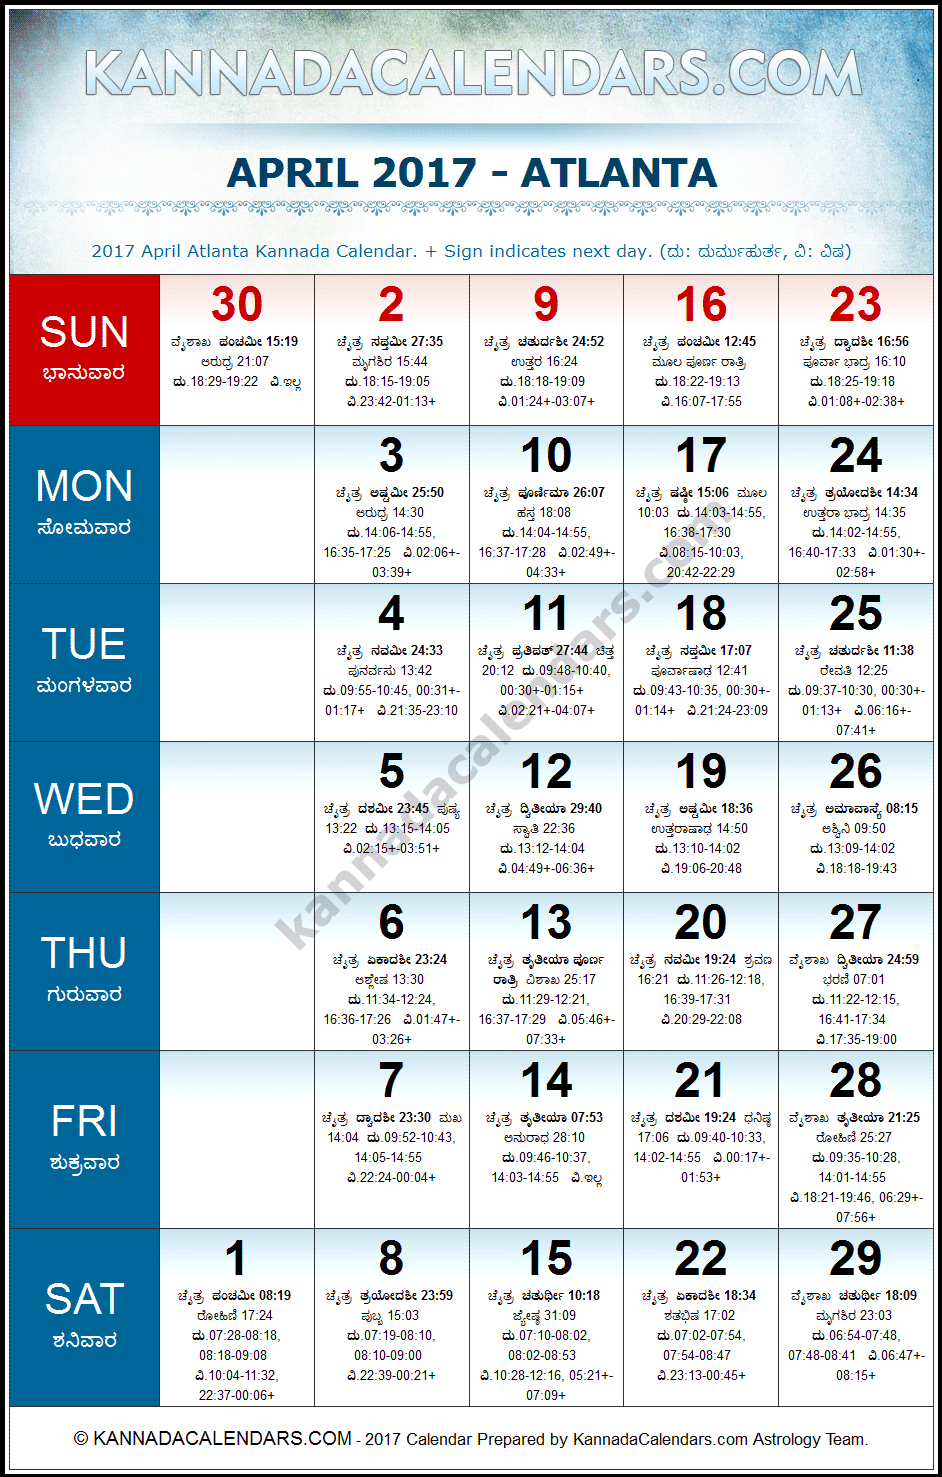 April 2017 Kannada Calendar for Atlanta, USA